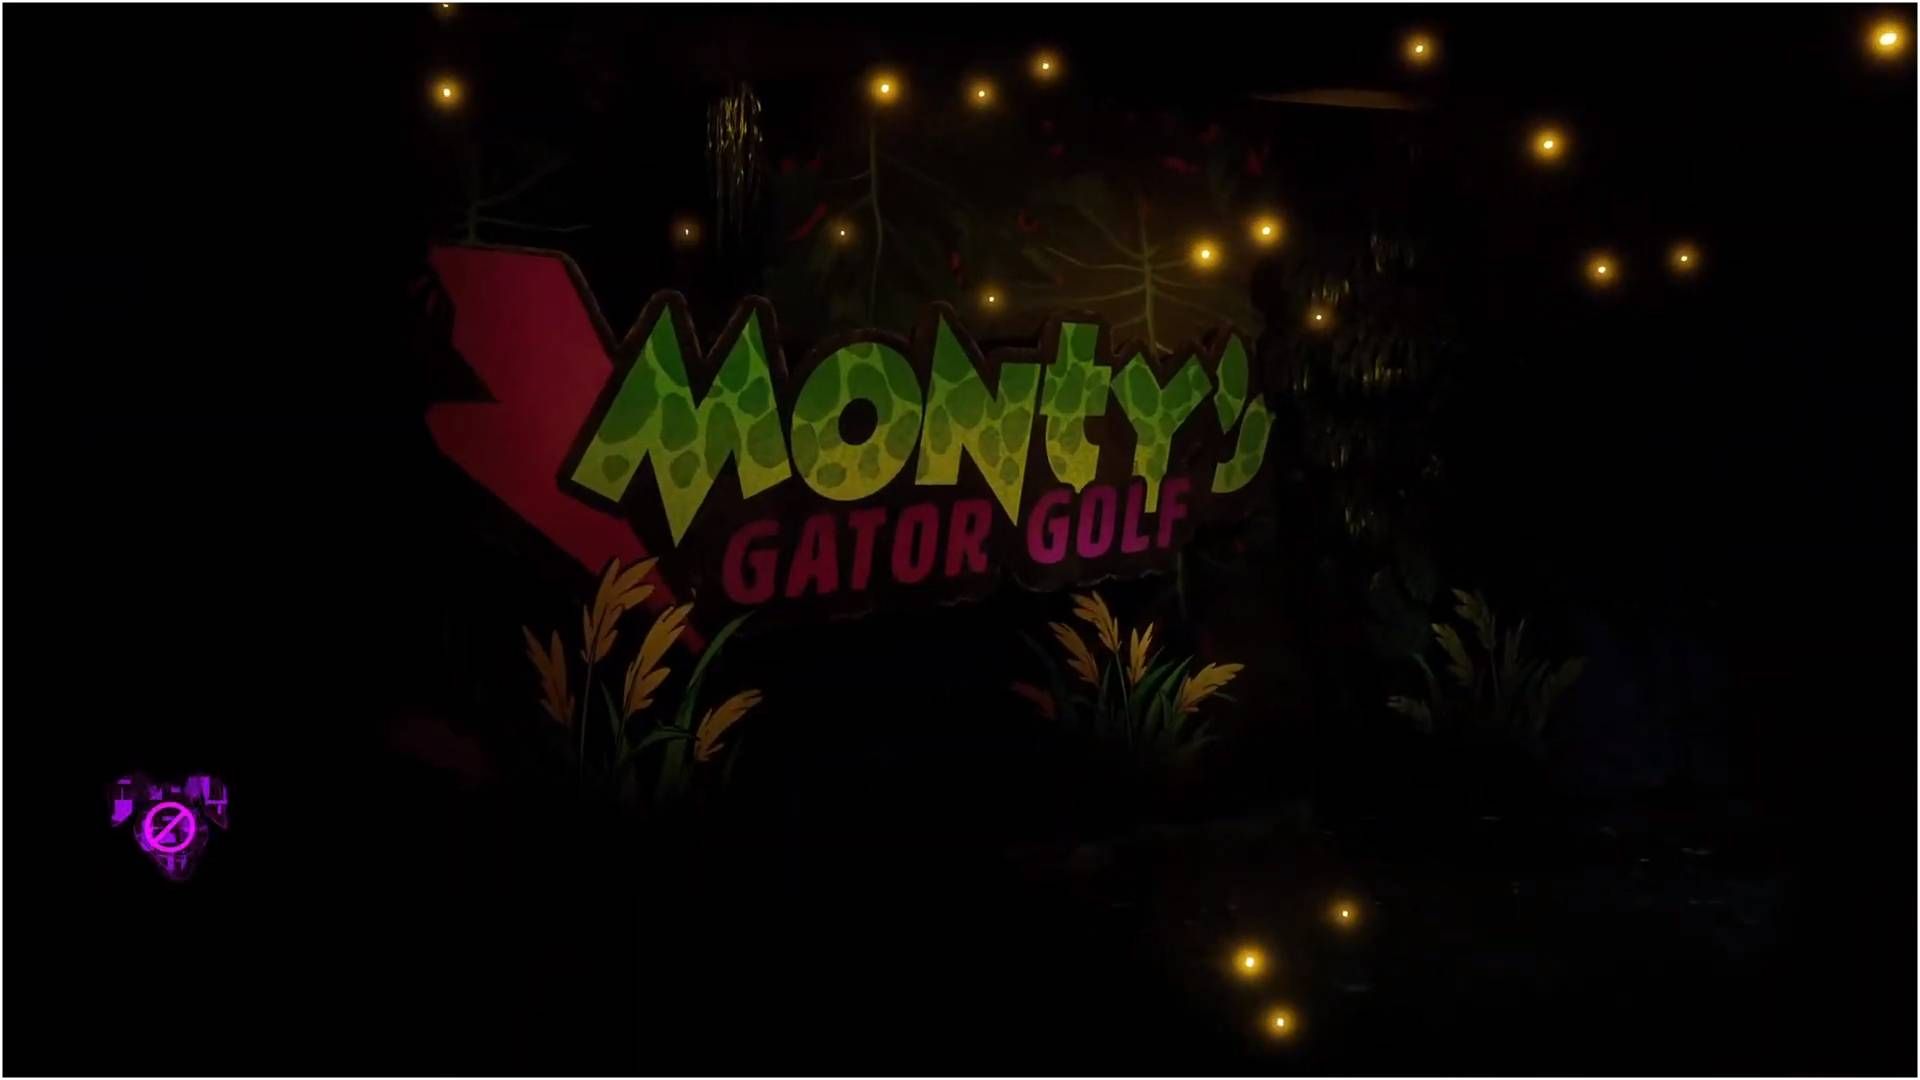 Returning to Monty's Gator Golf - Five Nights at Freddy's